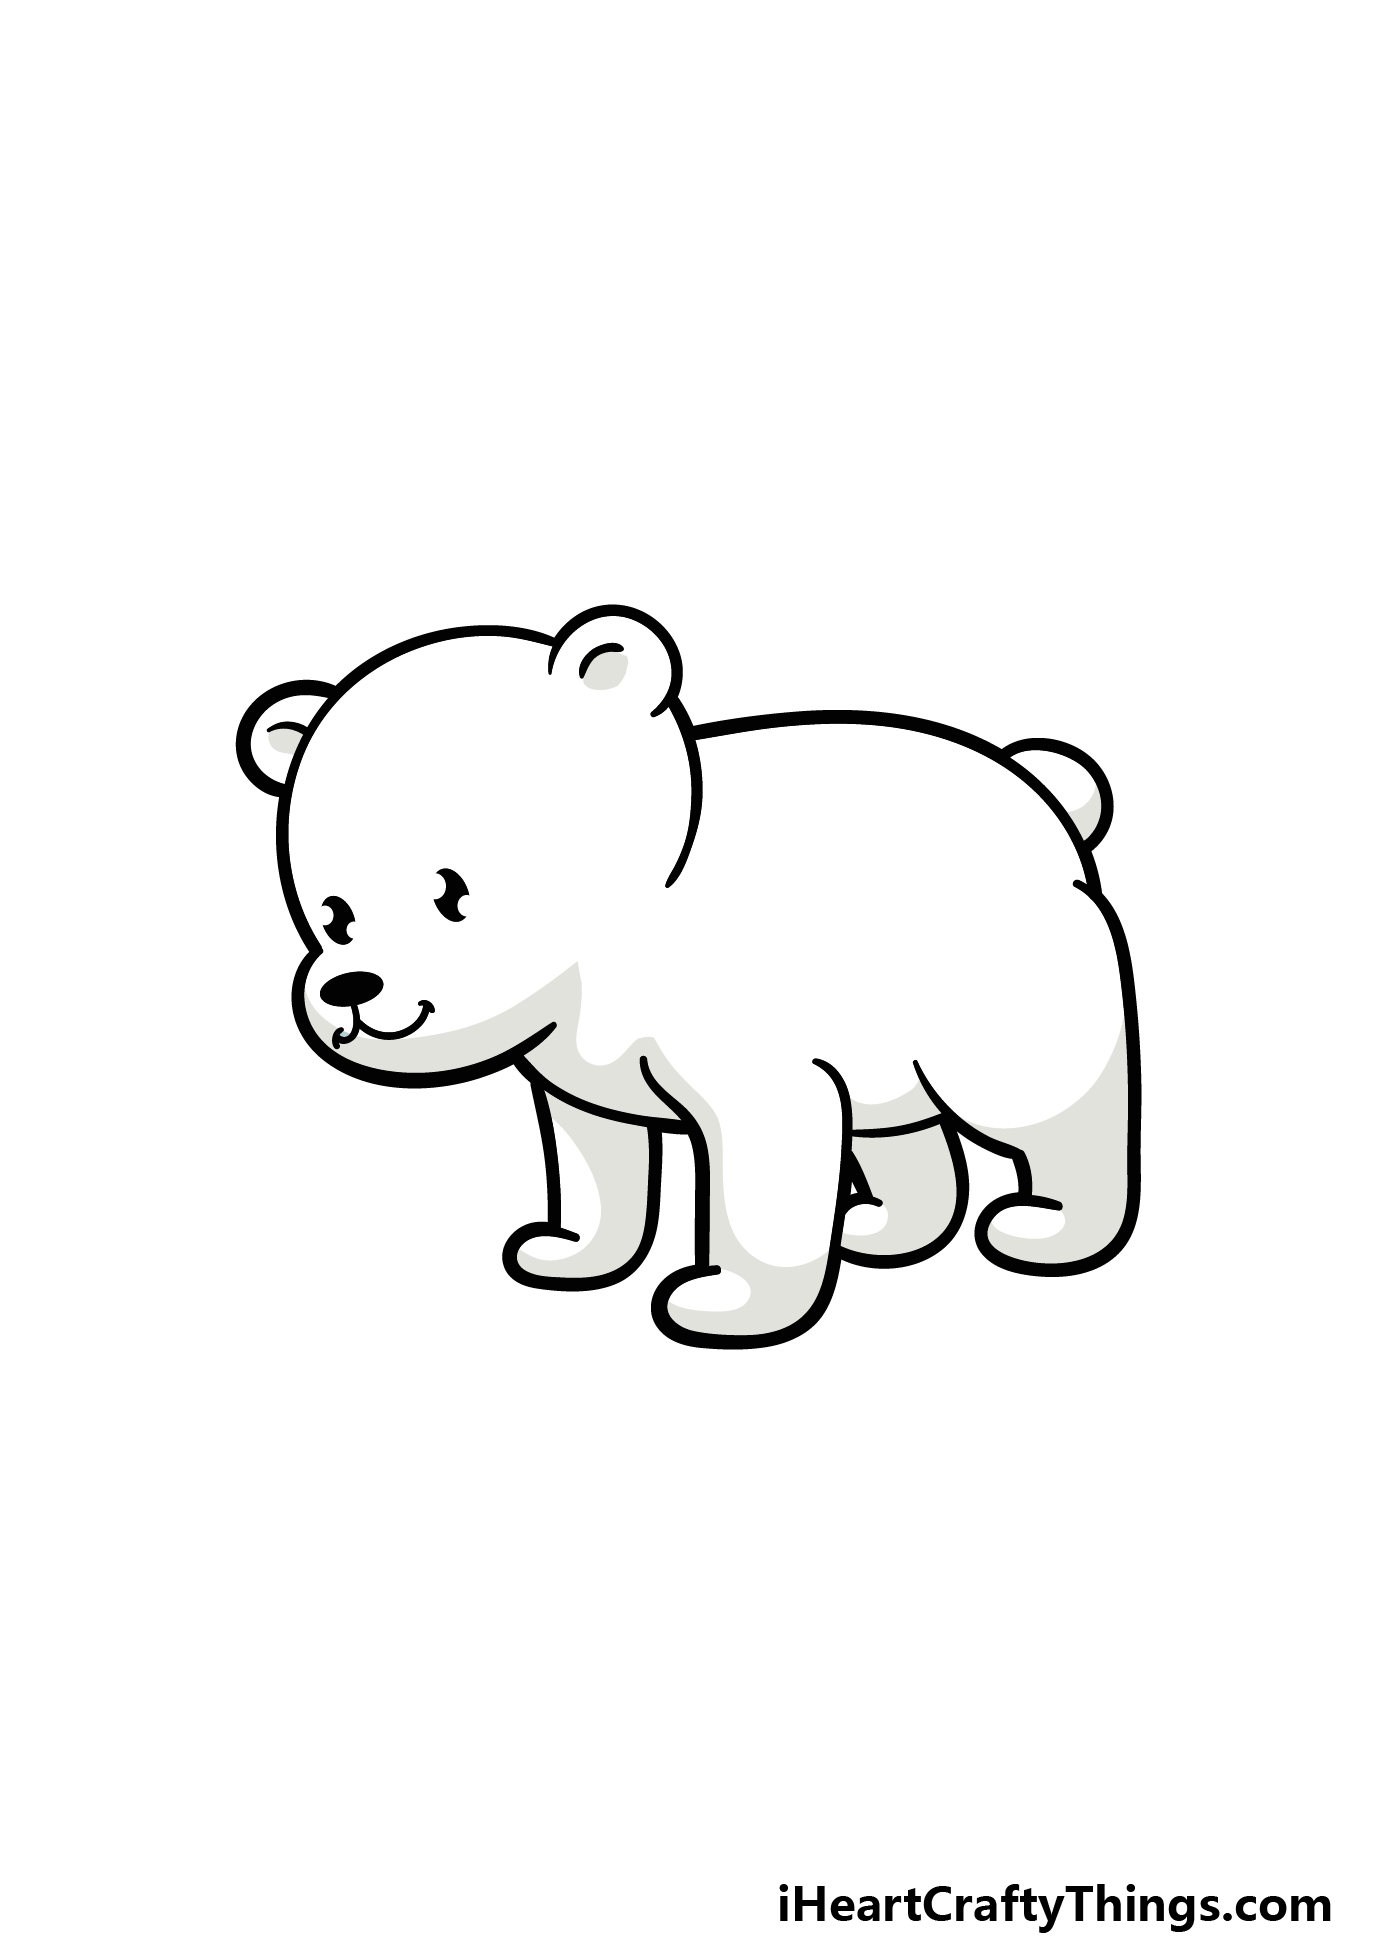 How to Draw A Cartoon Polar Bear – A Step by Step Guide